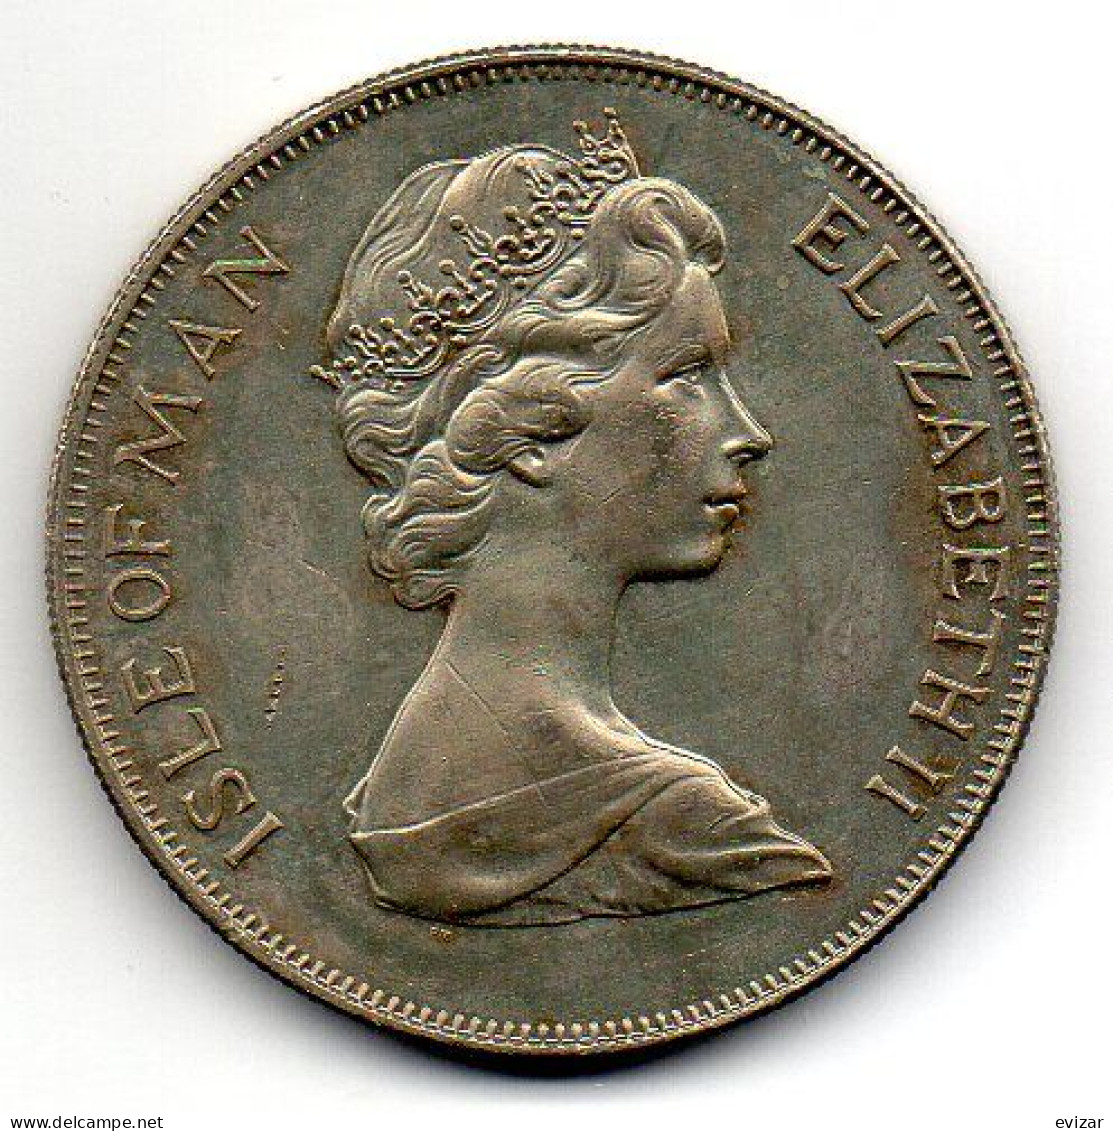 ISLE OF MAN, 25 Pence, Copper-Nickel, Year 1975, KM # 31 - Maundy Sets & Gedenkmünzen